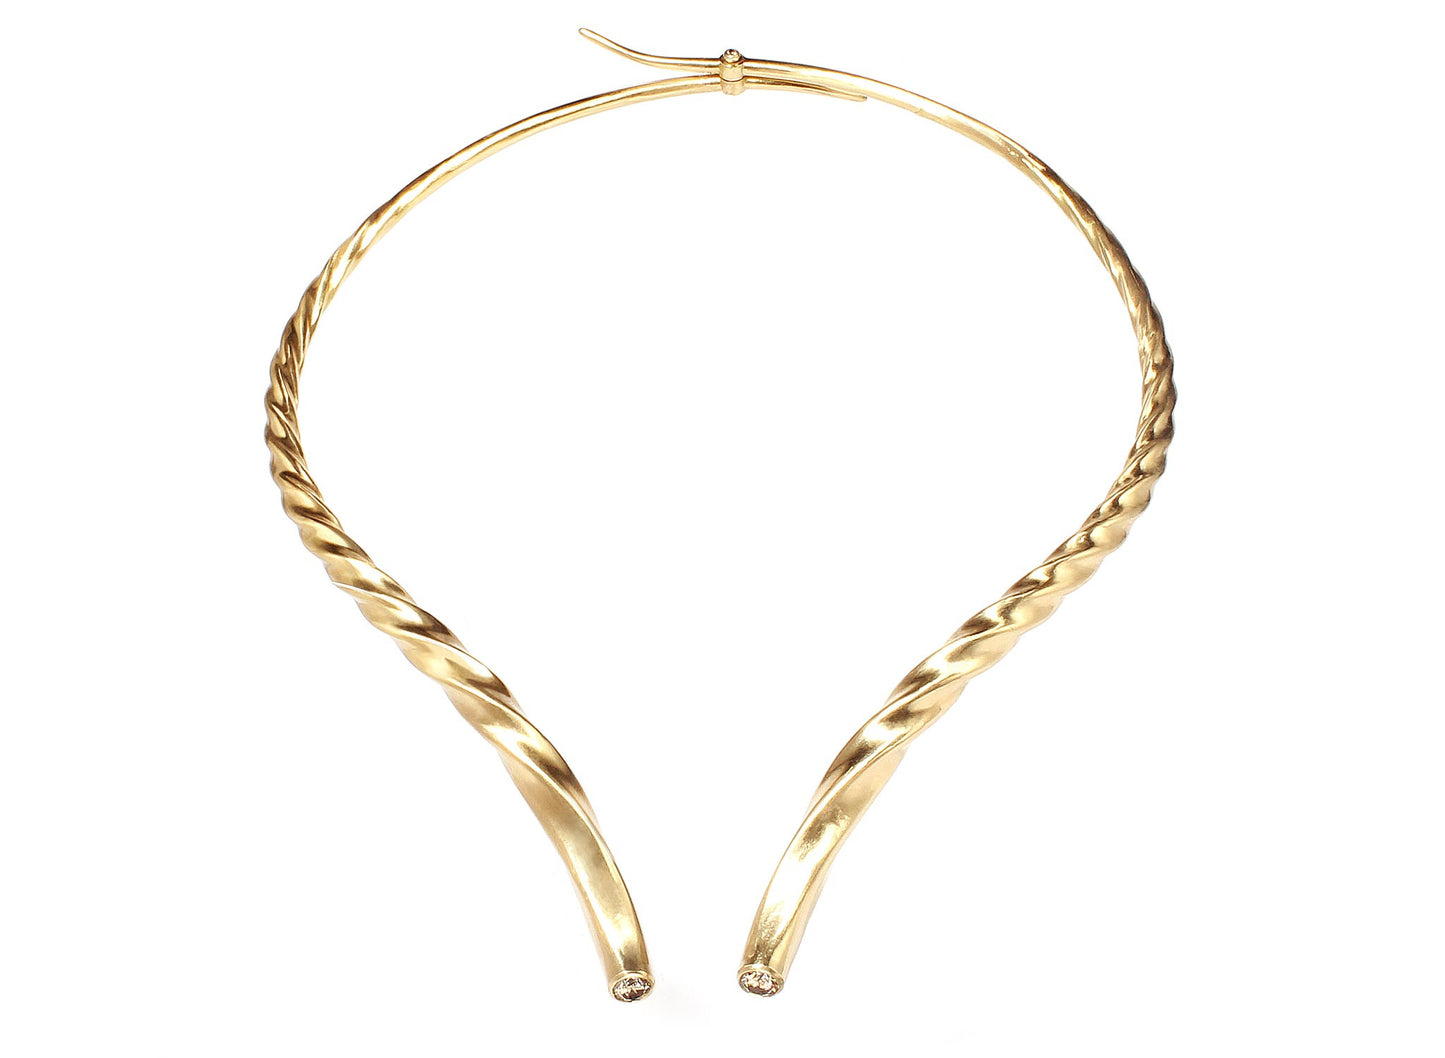 Gazelle Horns Necklace